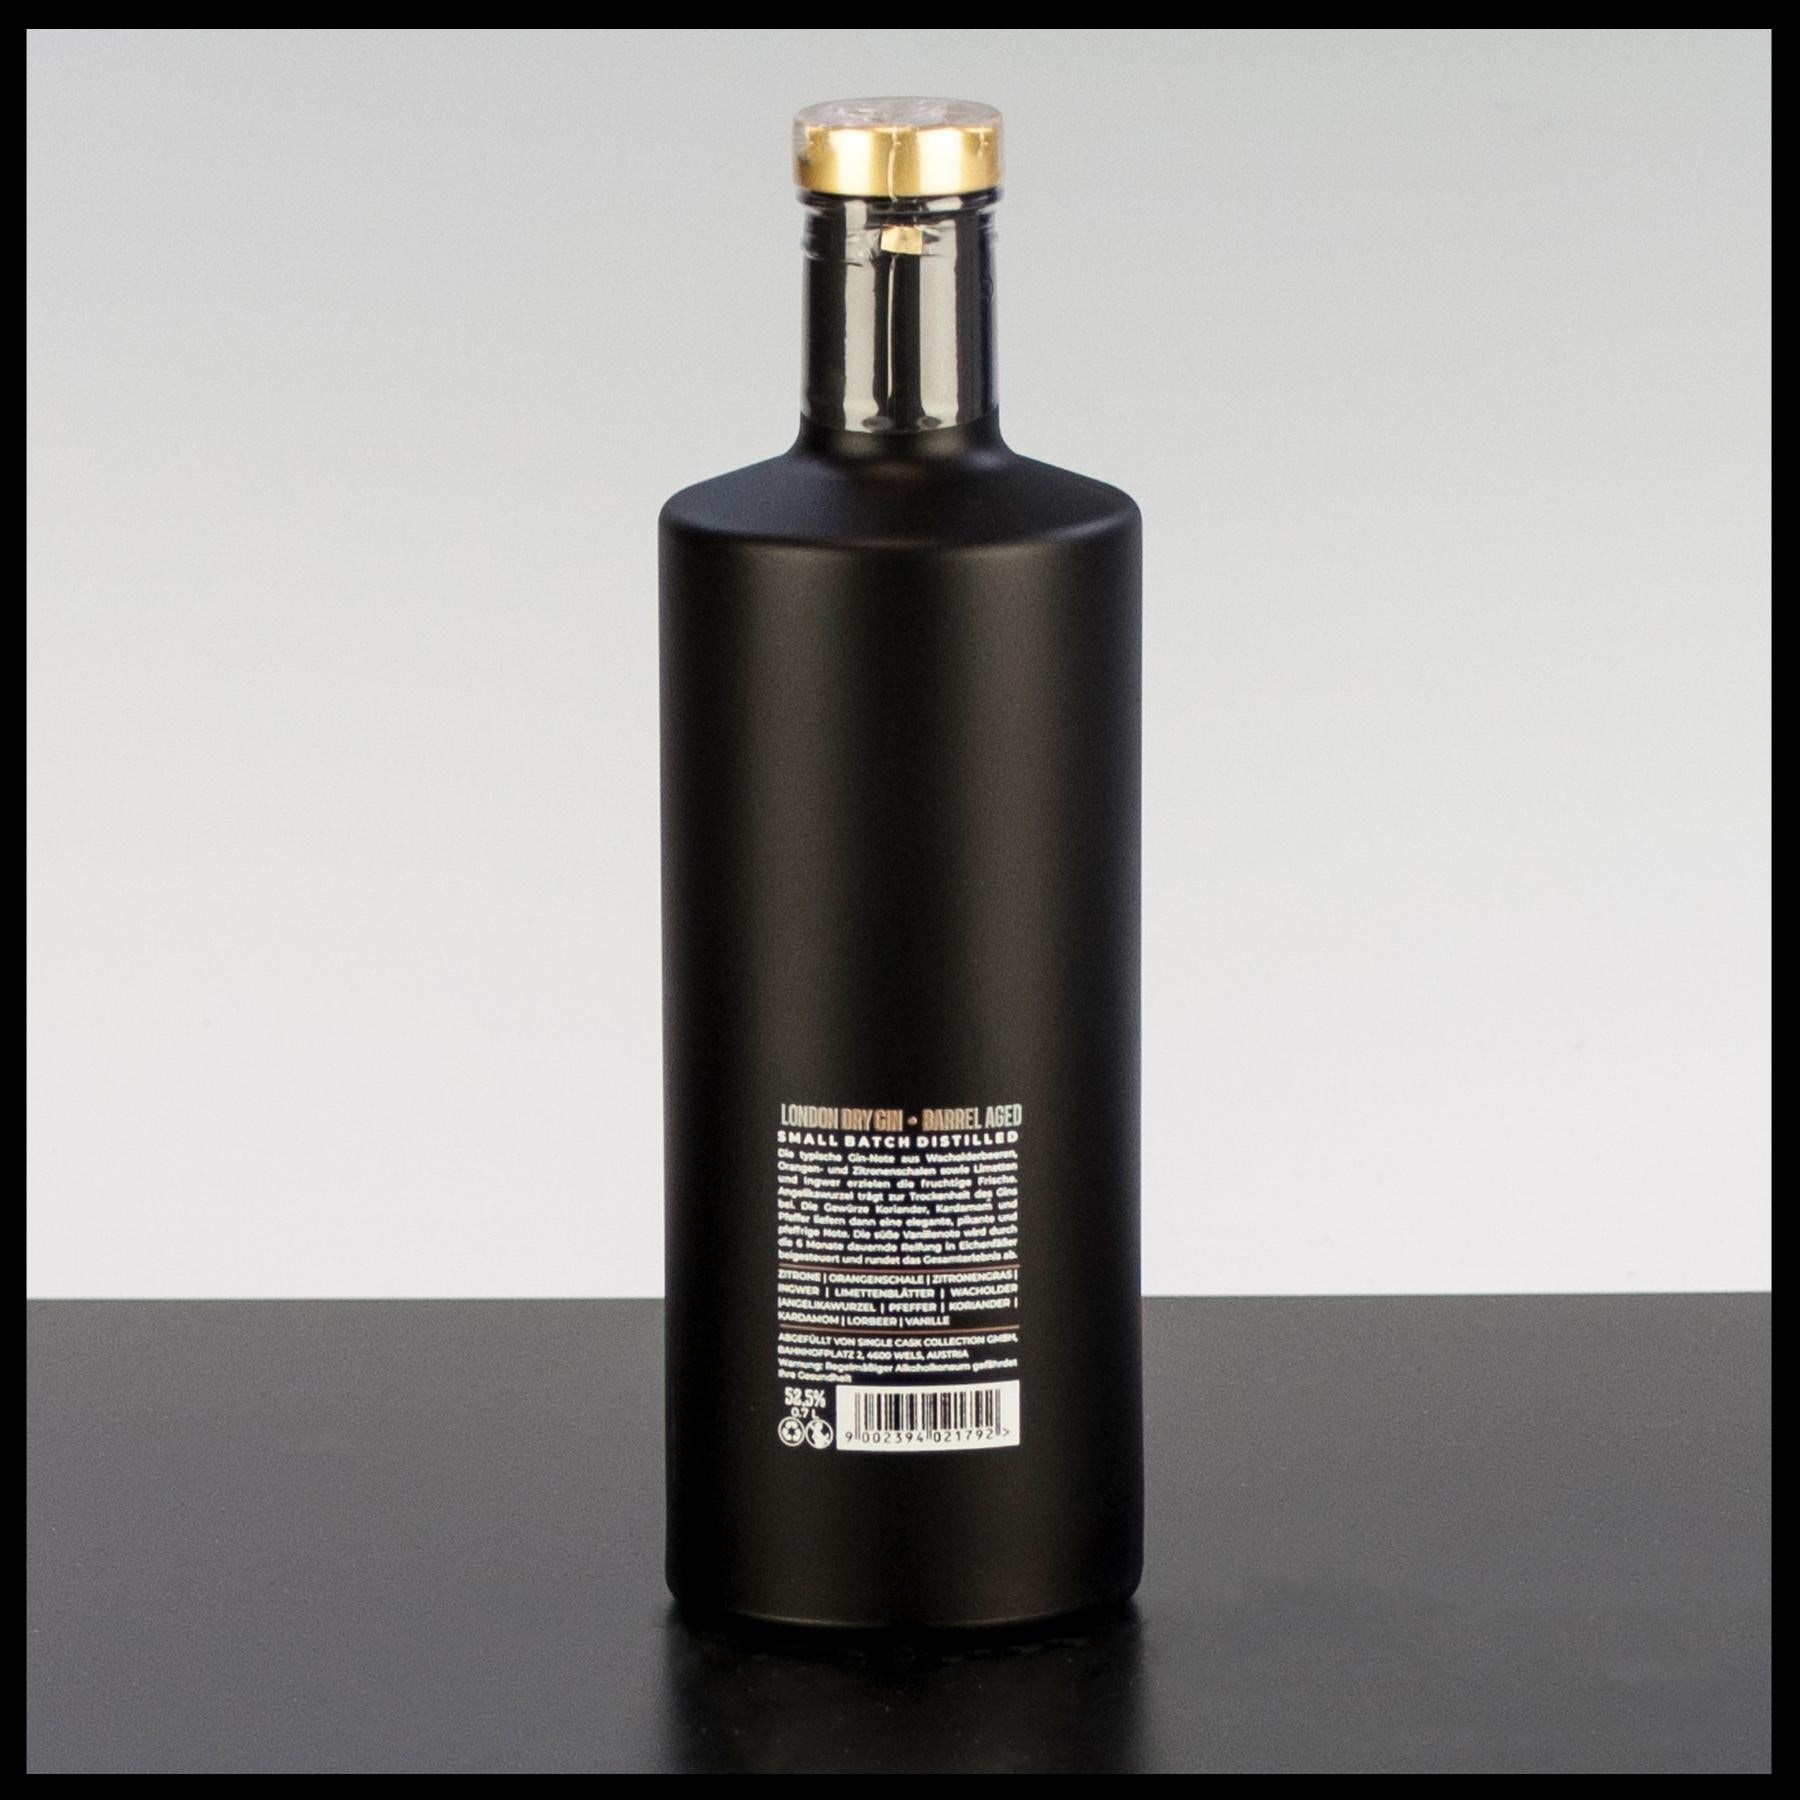 Single Cask Collection Barrel Aged London Dry Gin 0,7L - 52,5% Vol. - Trinklusiv